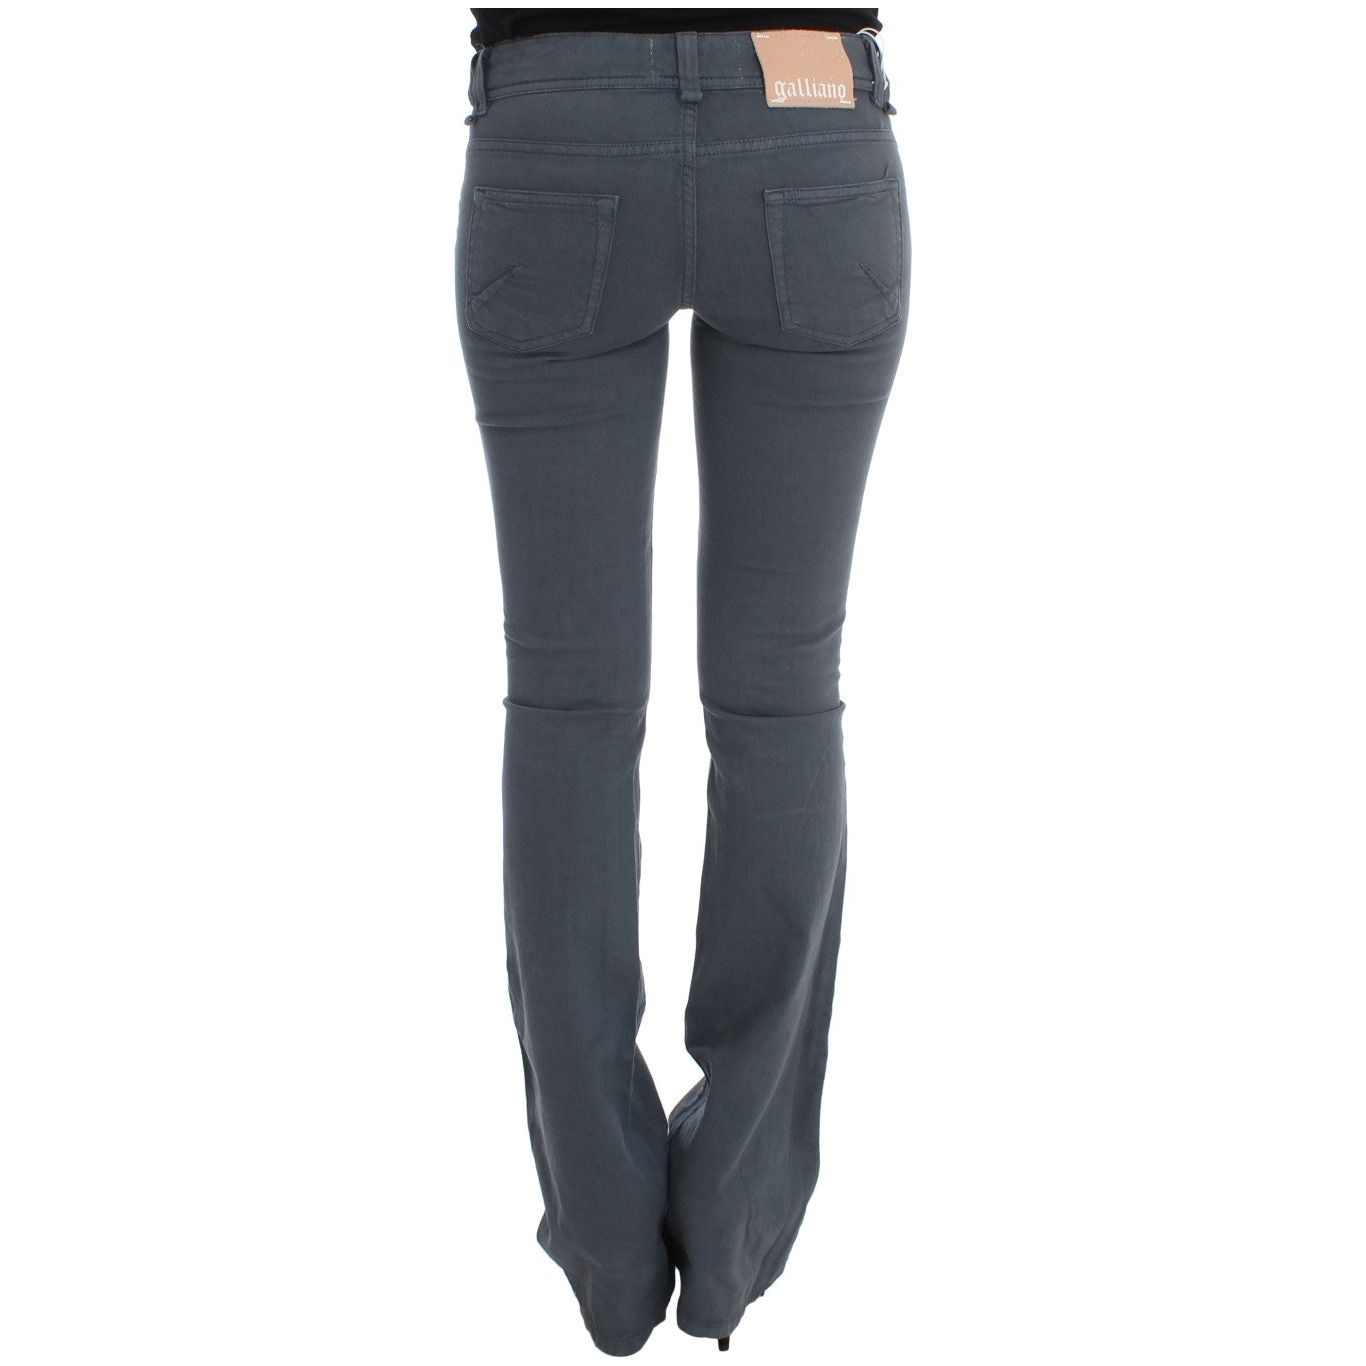 John Galliano Elegant Slim Fit Bootcut Jeans Jeans & Pants blue-cotton-blend-slim-fit-bootcut-jeans-2 330188-blue-cotton-blend-slim-fit-bootcut-jeans-3-2.jpg